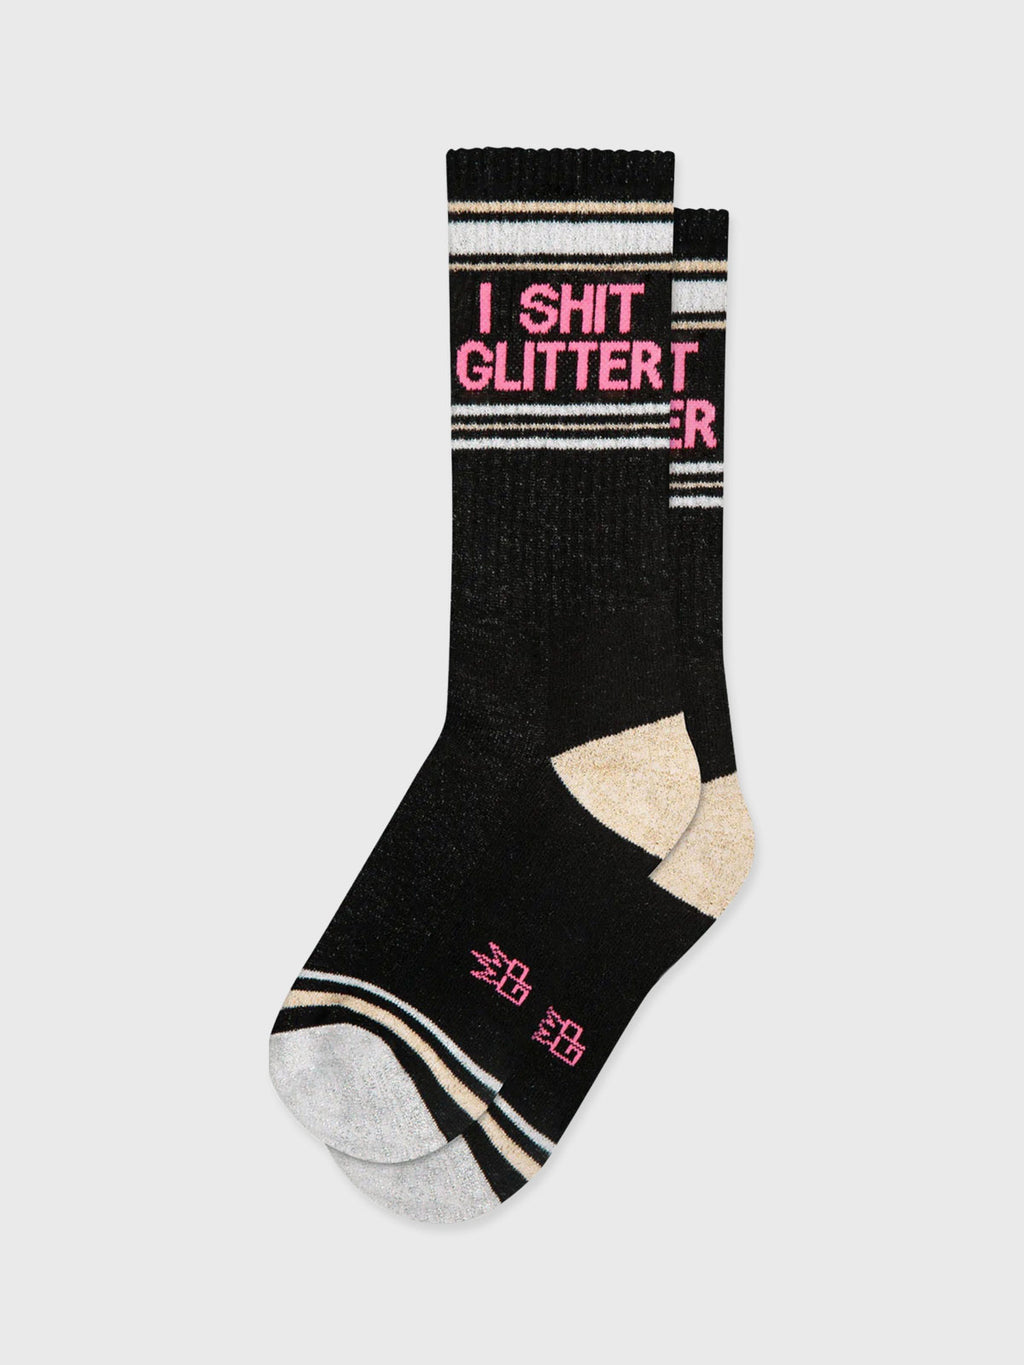 Gumball Poodle - I Shit Glitter Socks